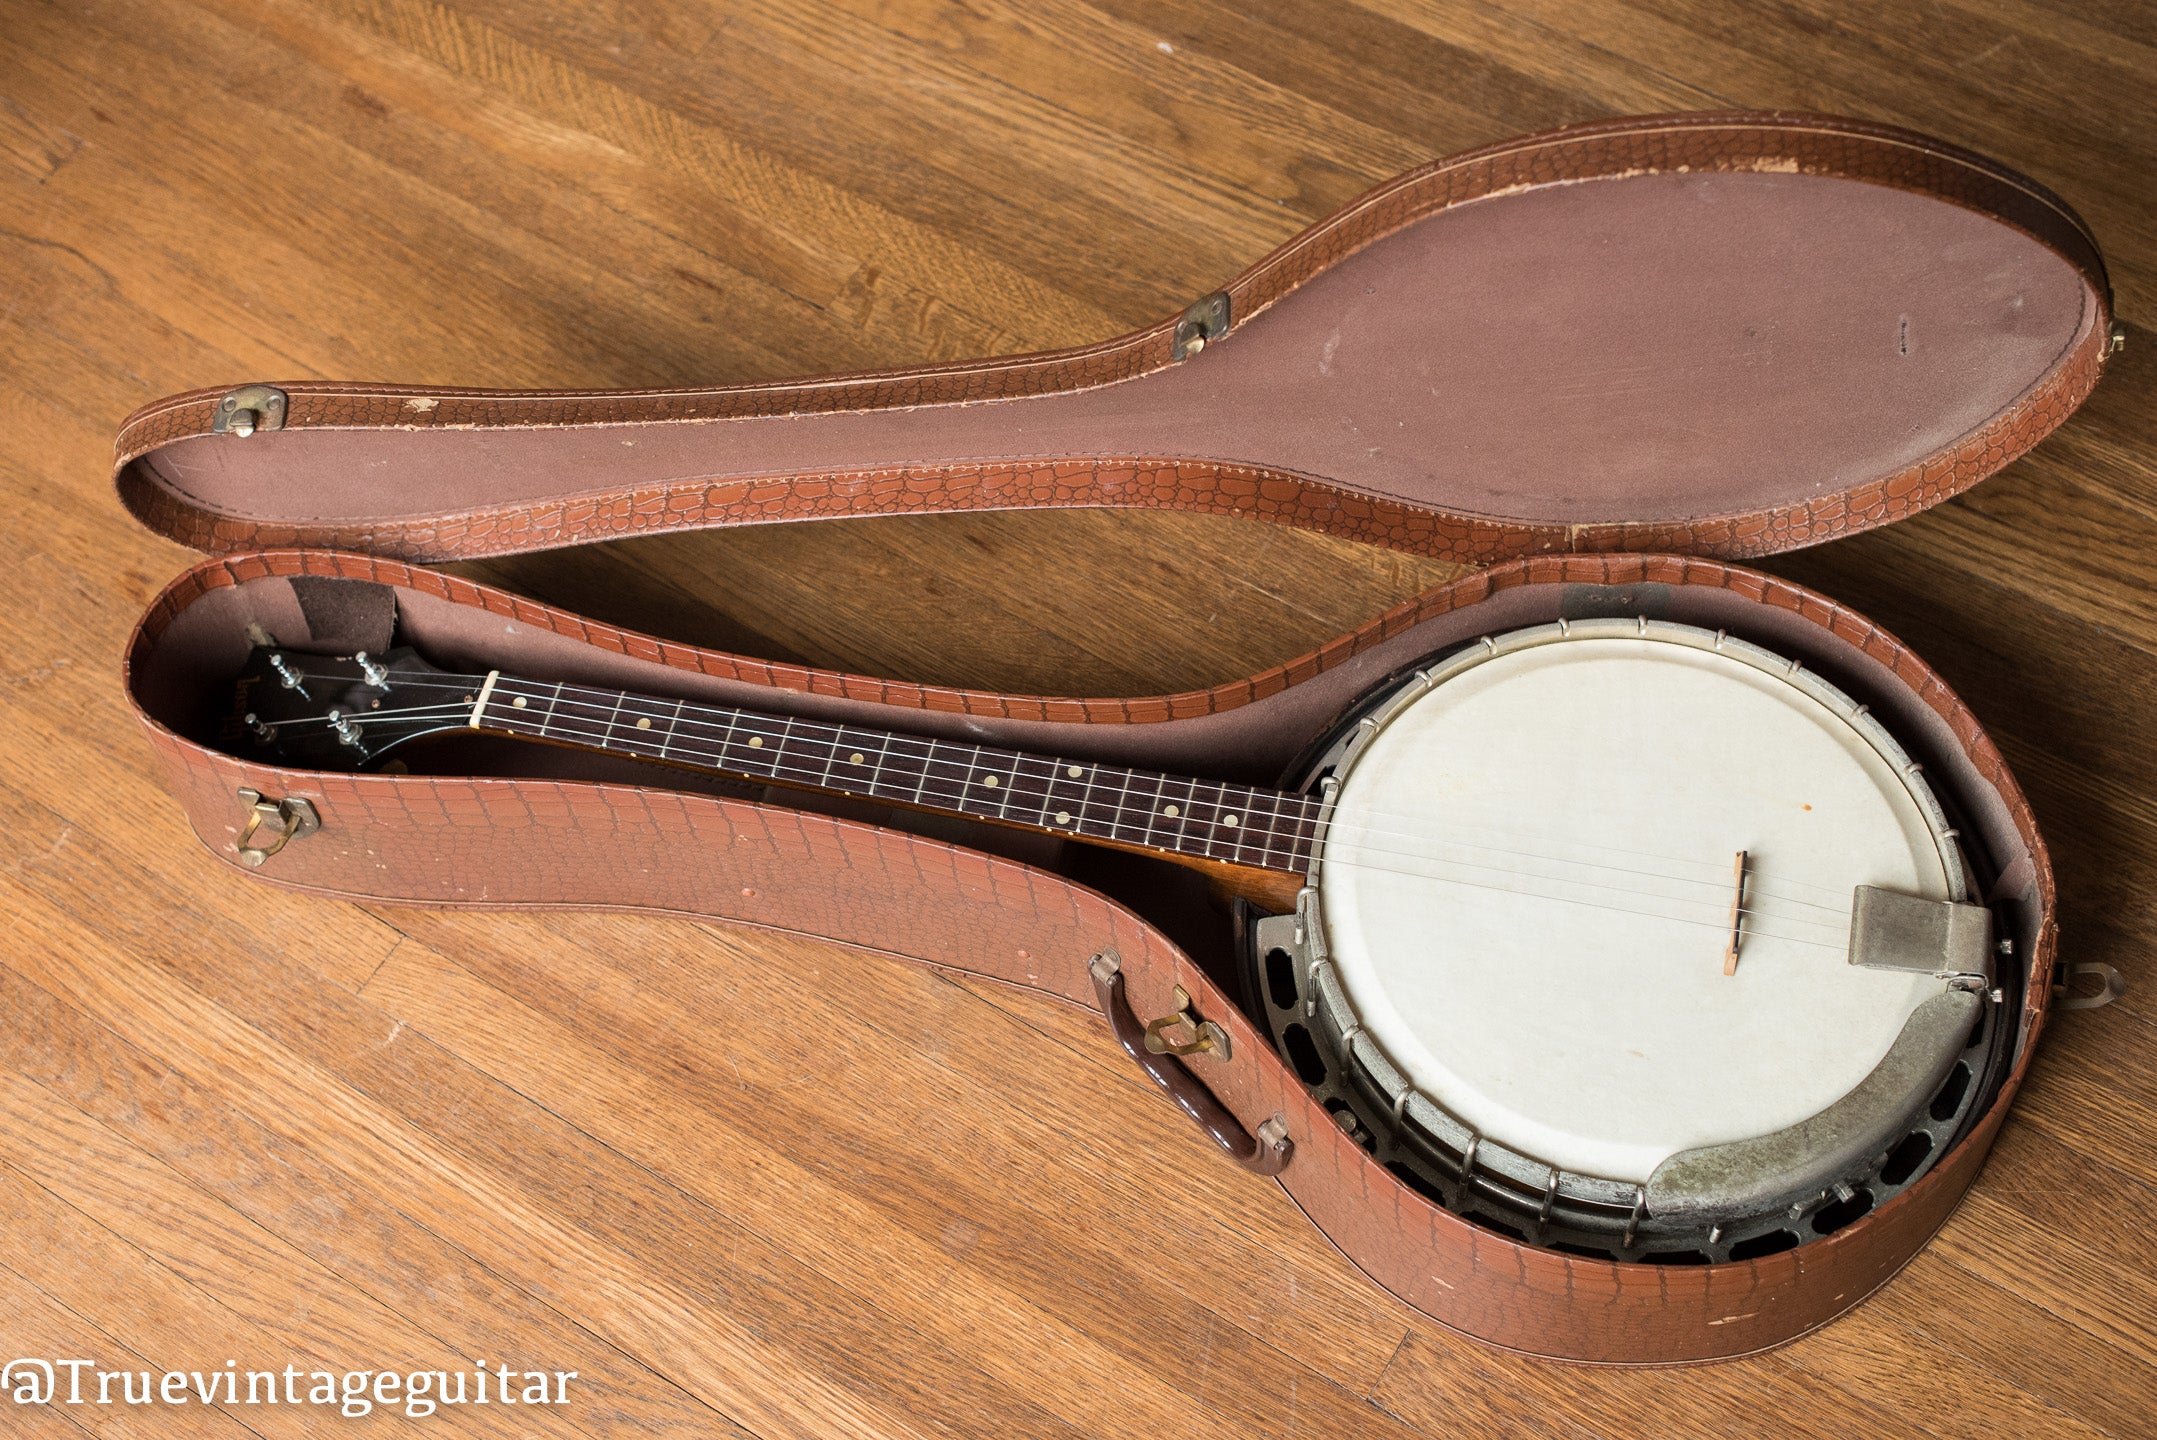 Vintage 1957 Gibson TB-100 tenor banjo